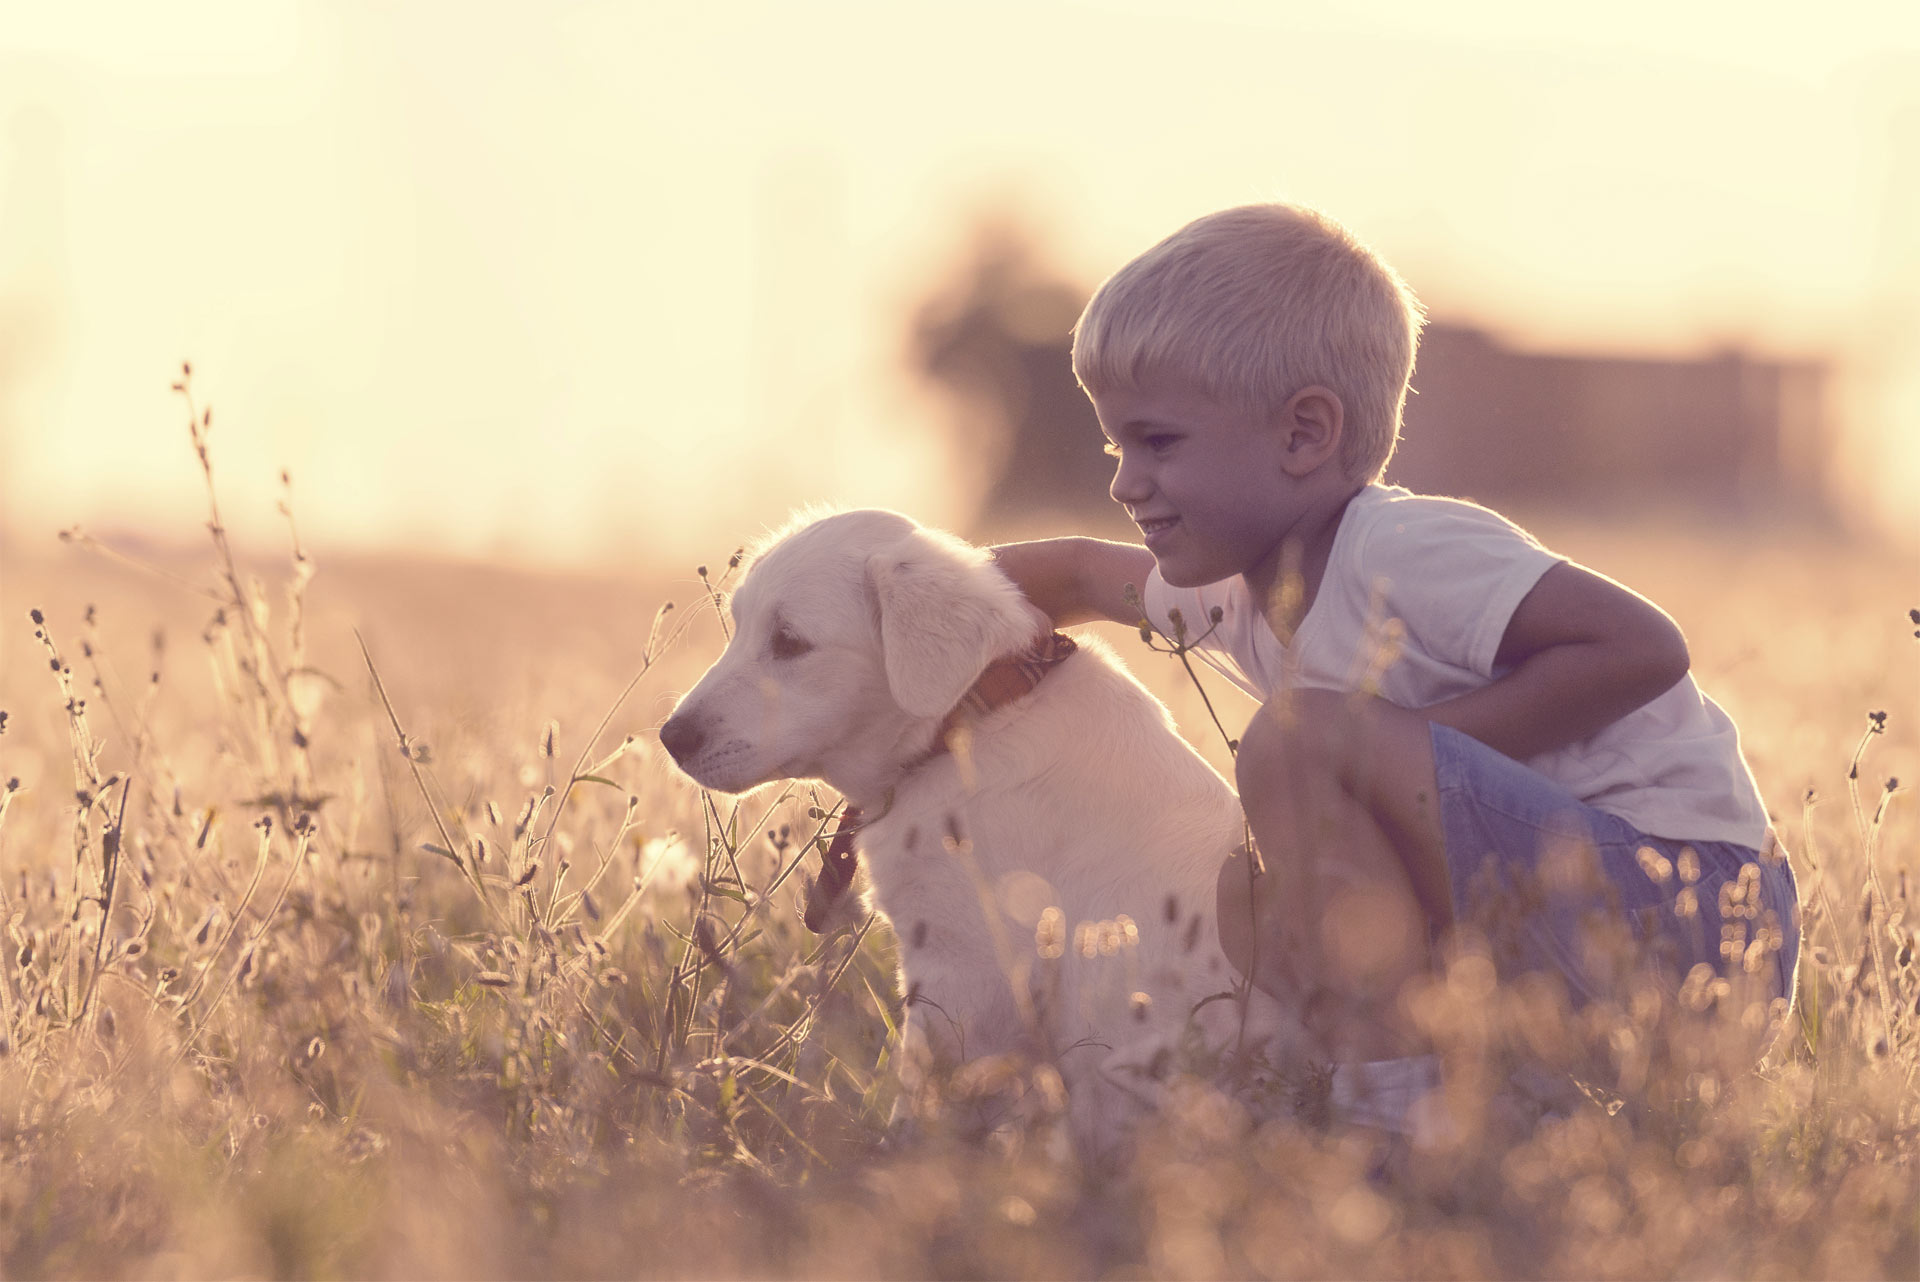 Un estudio en España reveló que 94% de infantes afirma sentirse mejor con un animal de compañía cerca